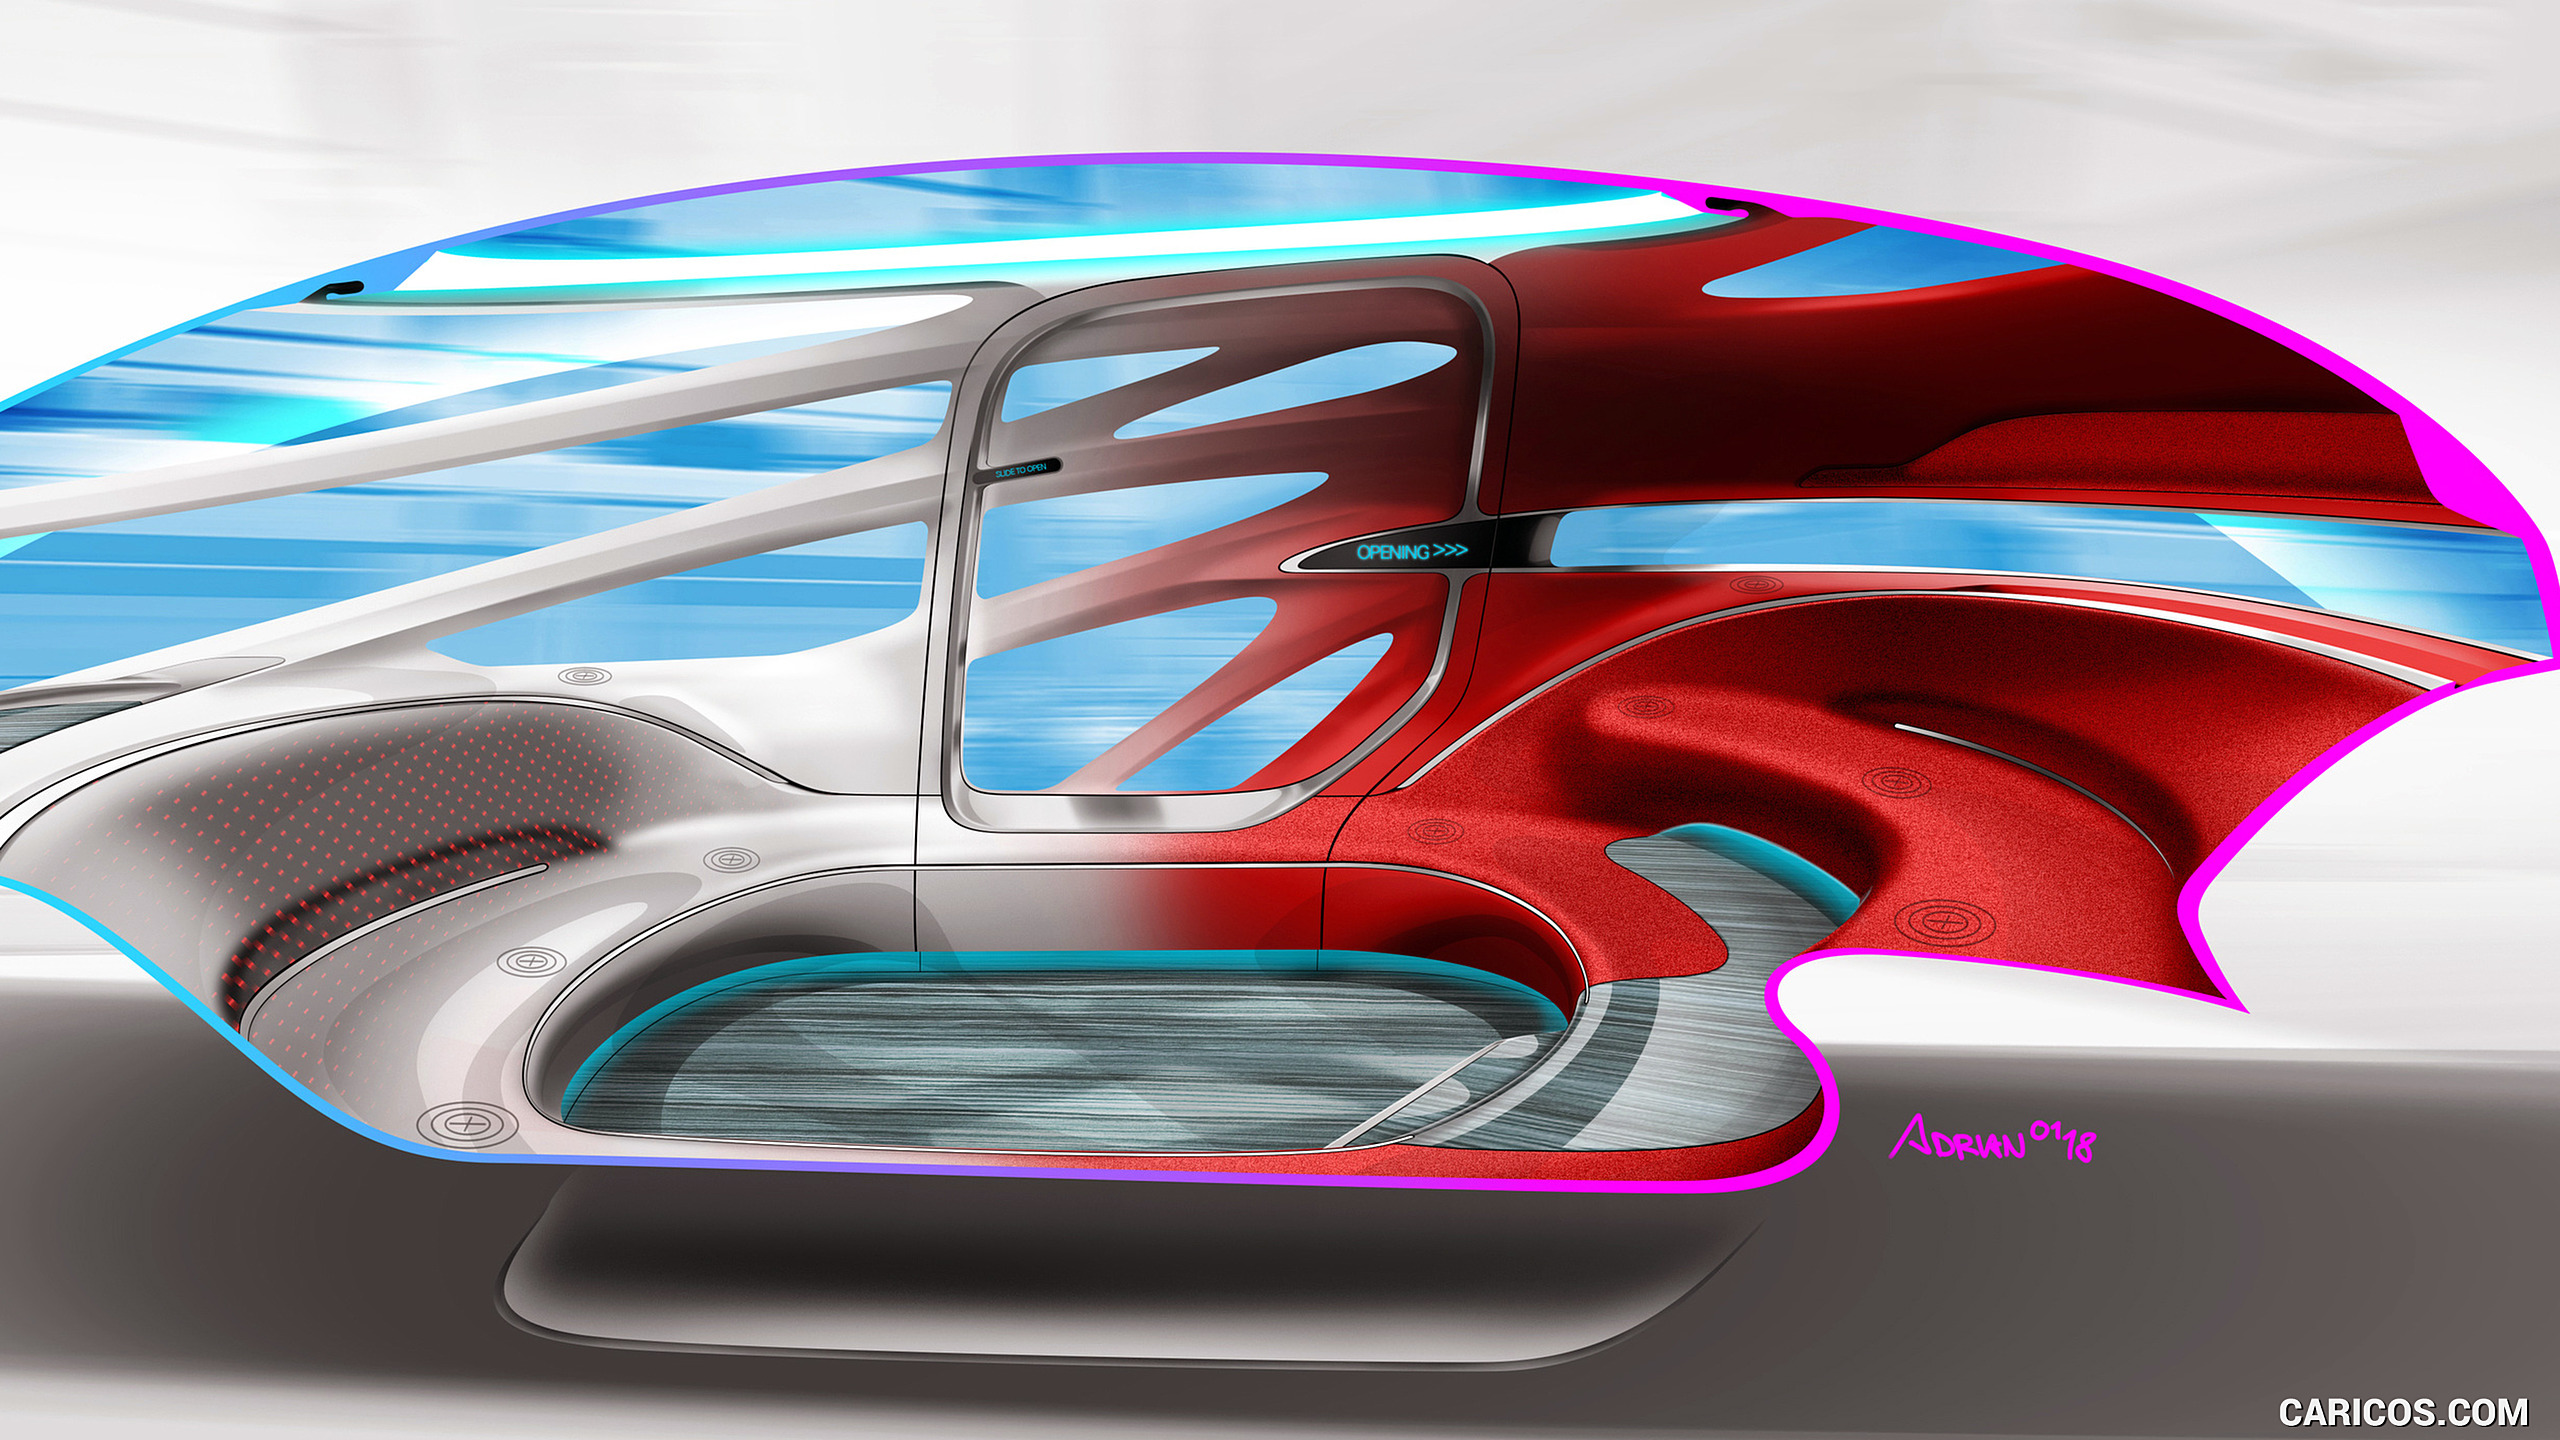 2018 Mercedes-Benz Vision URBANETIC Concept - Design Sketch, #12 of 14